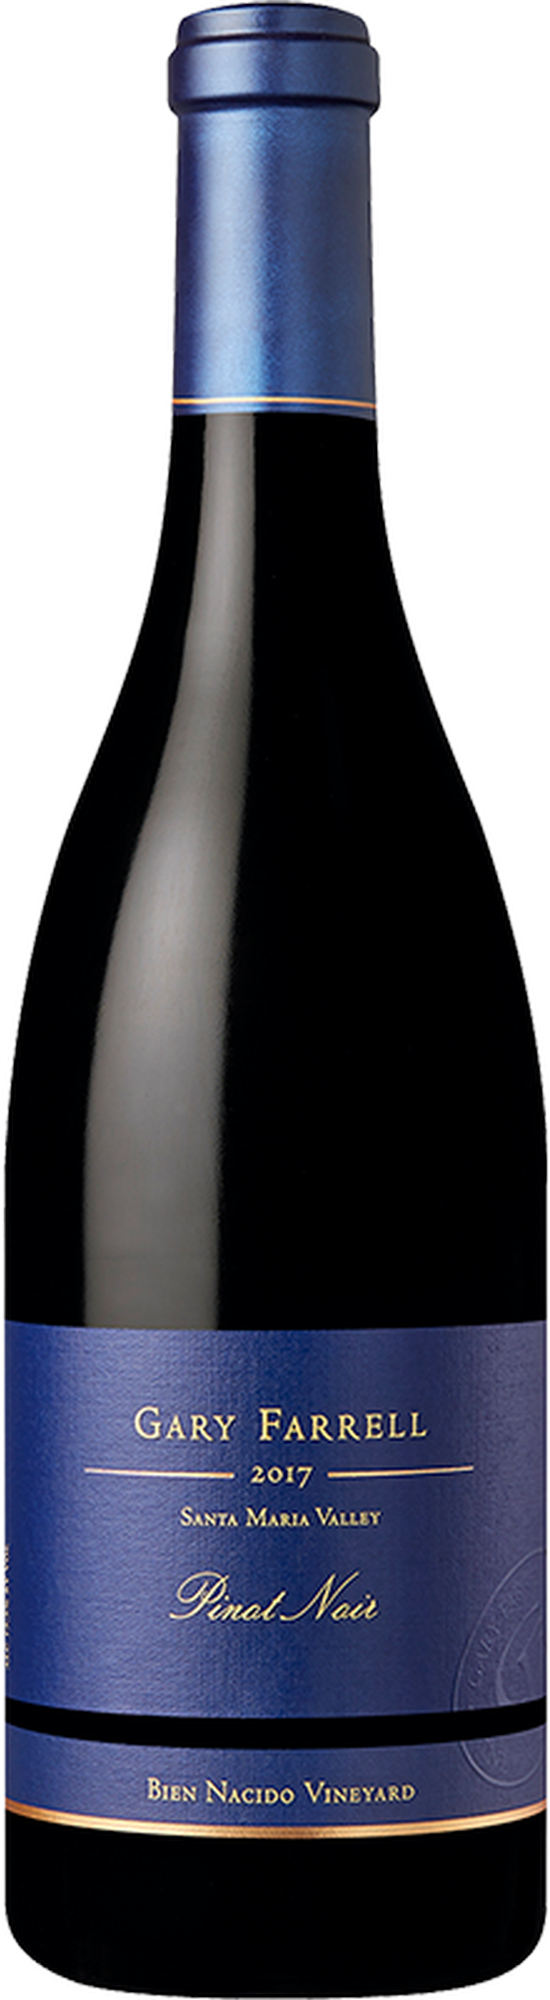 2017 Bien Nacido Vineyard Pinot Noir